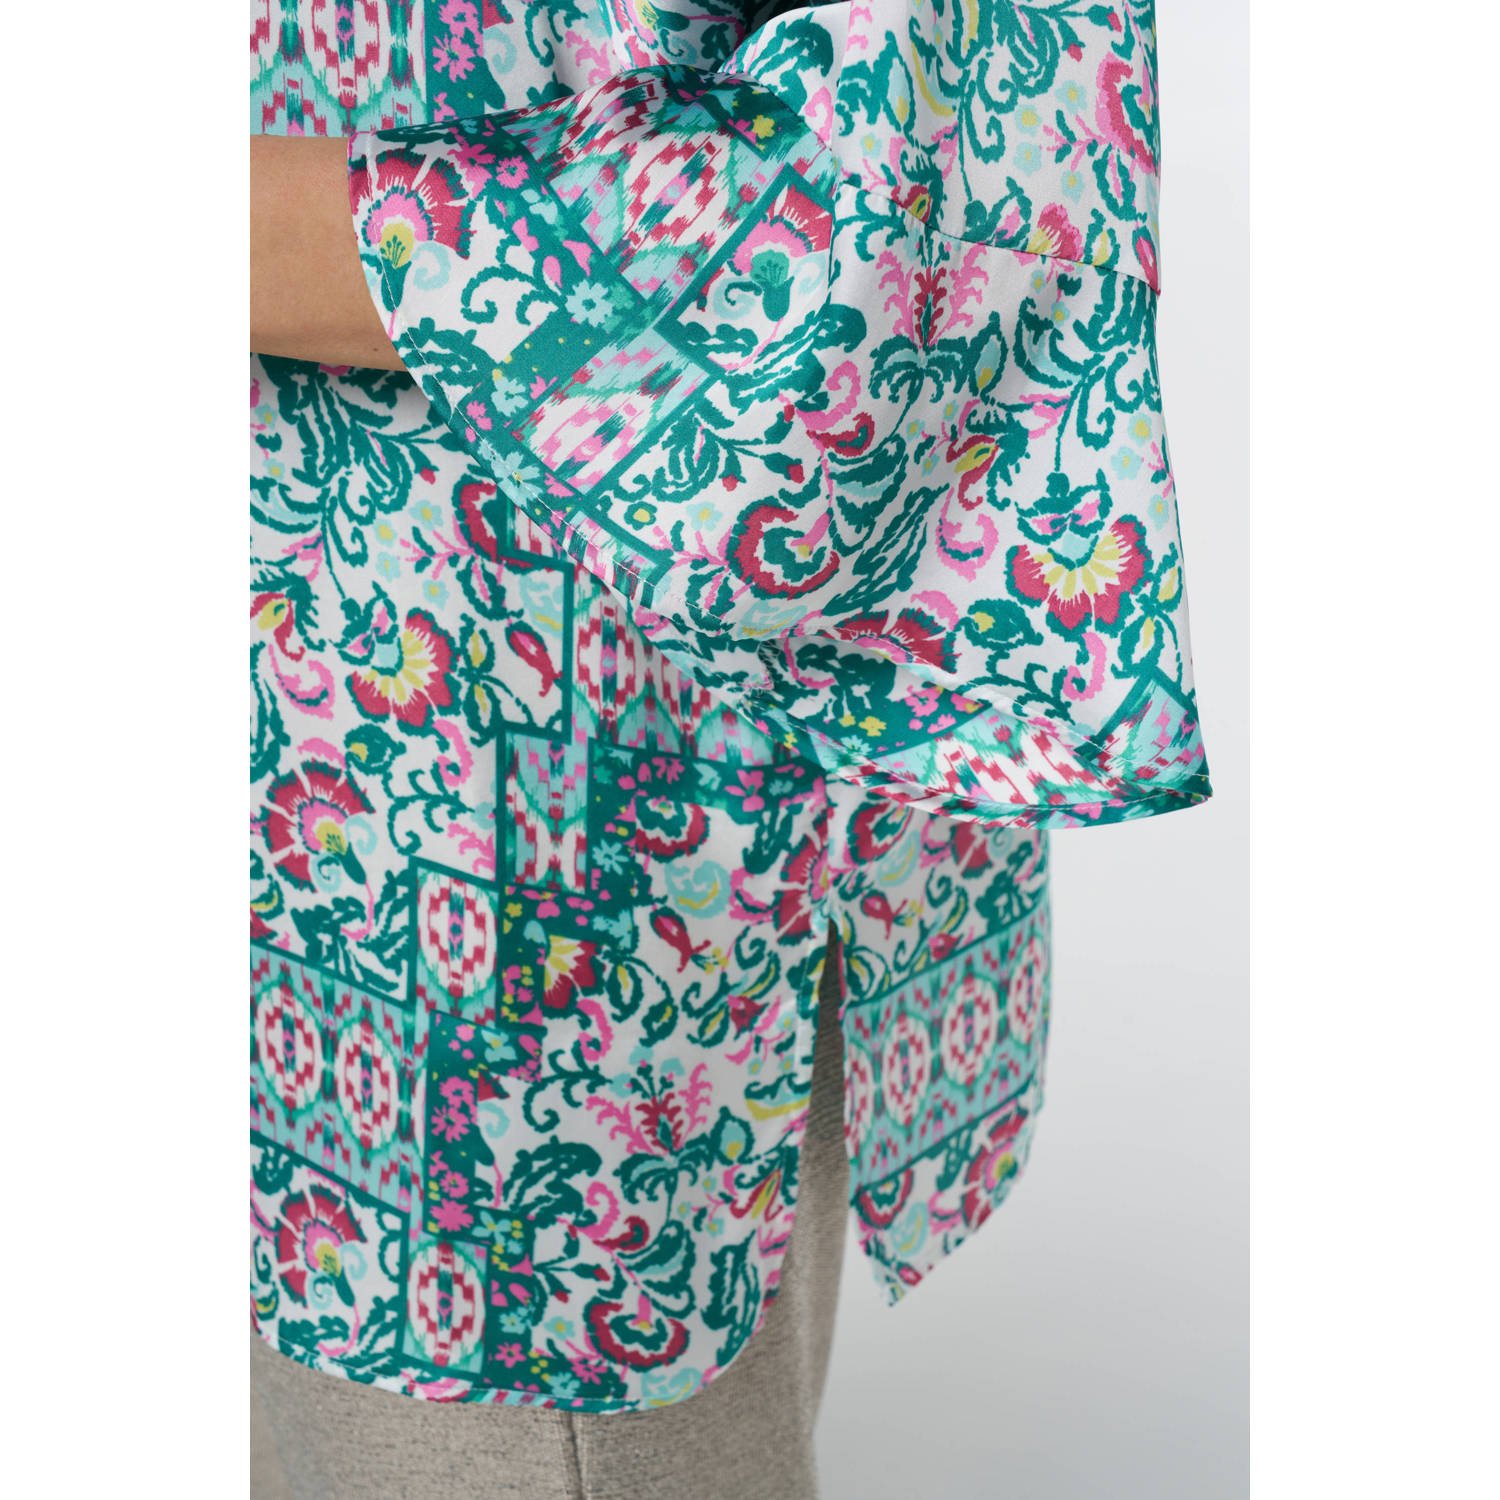 MS Mode kimono met all over print groen ecru roze